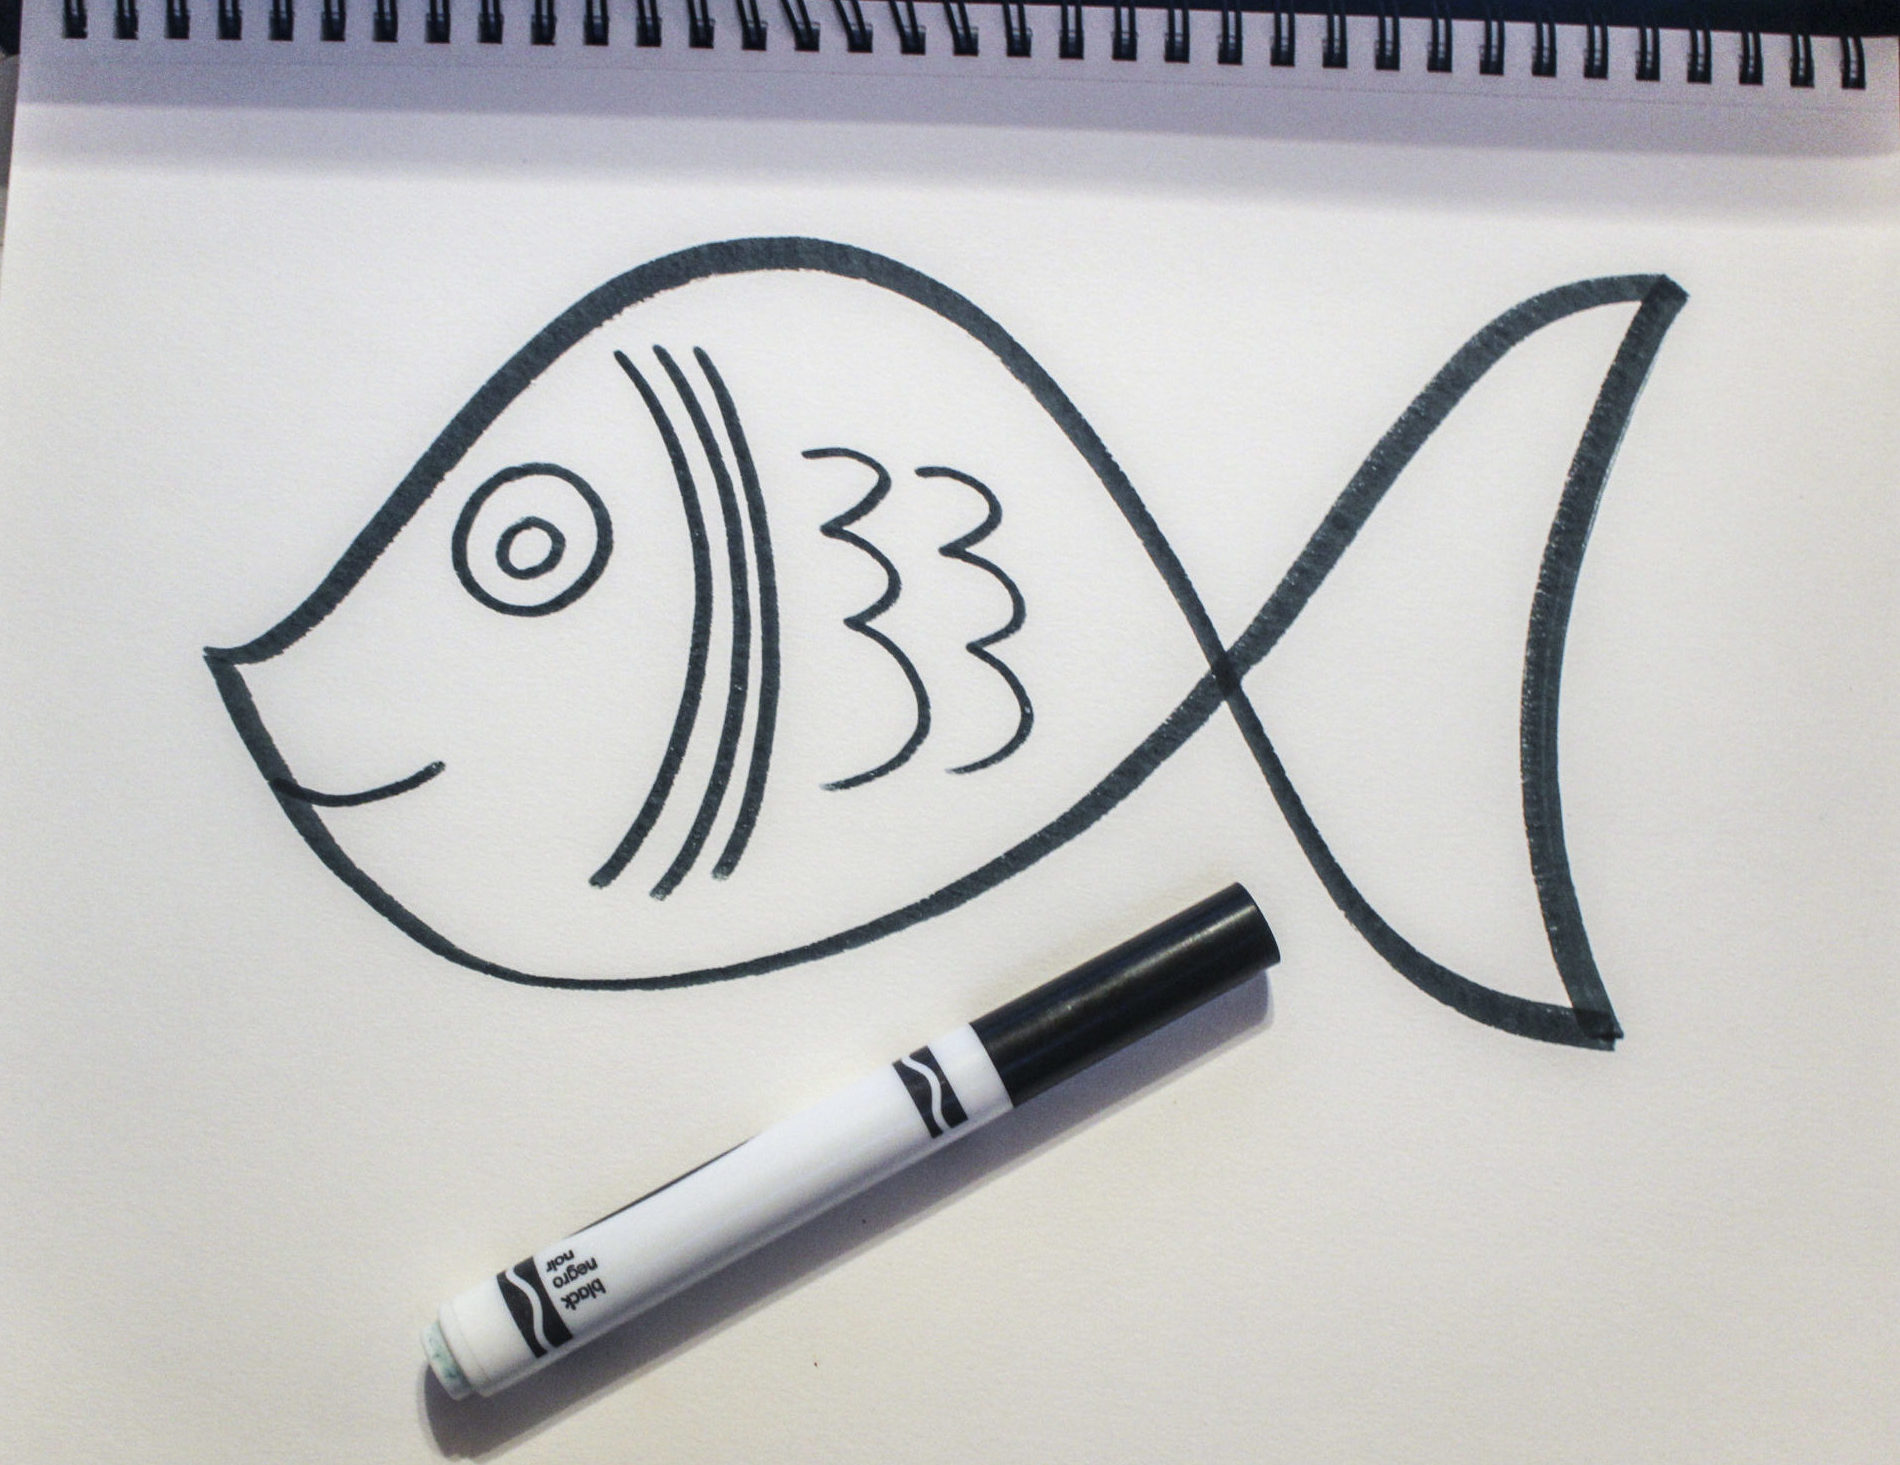 Fish drawings, me, pen, 2021 : r/Art